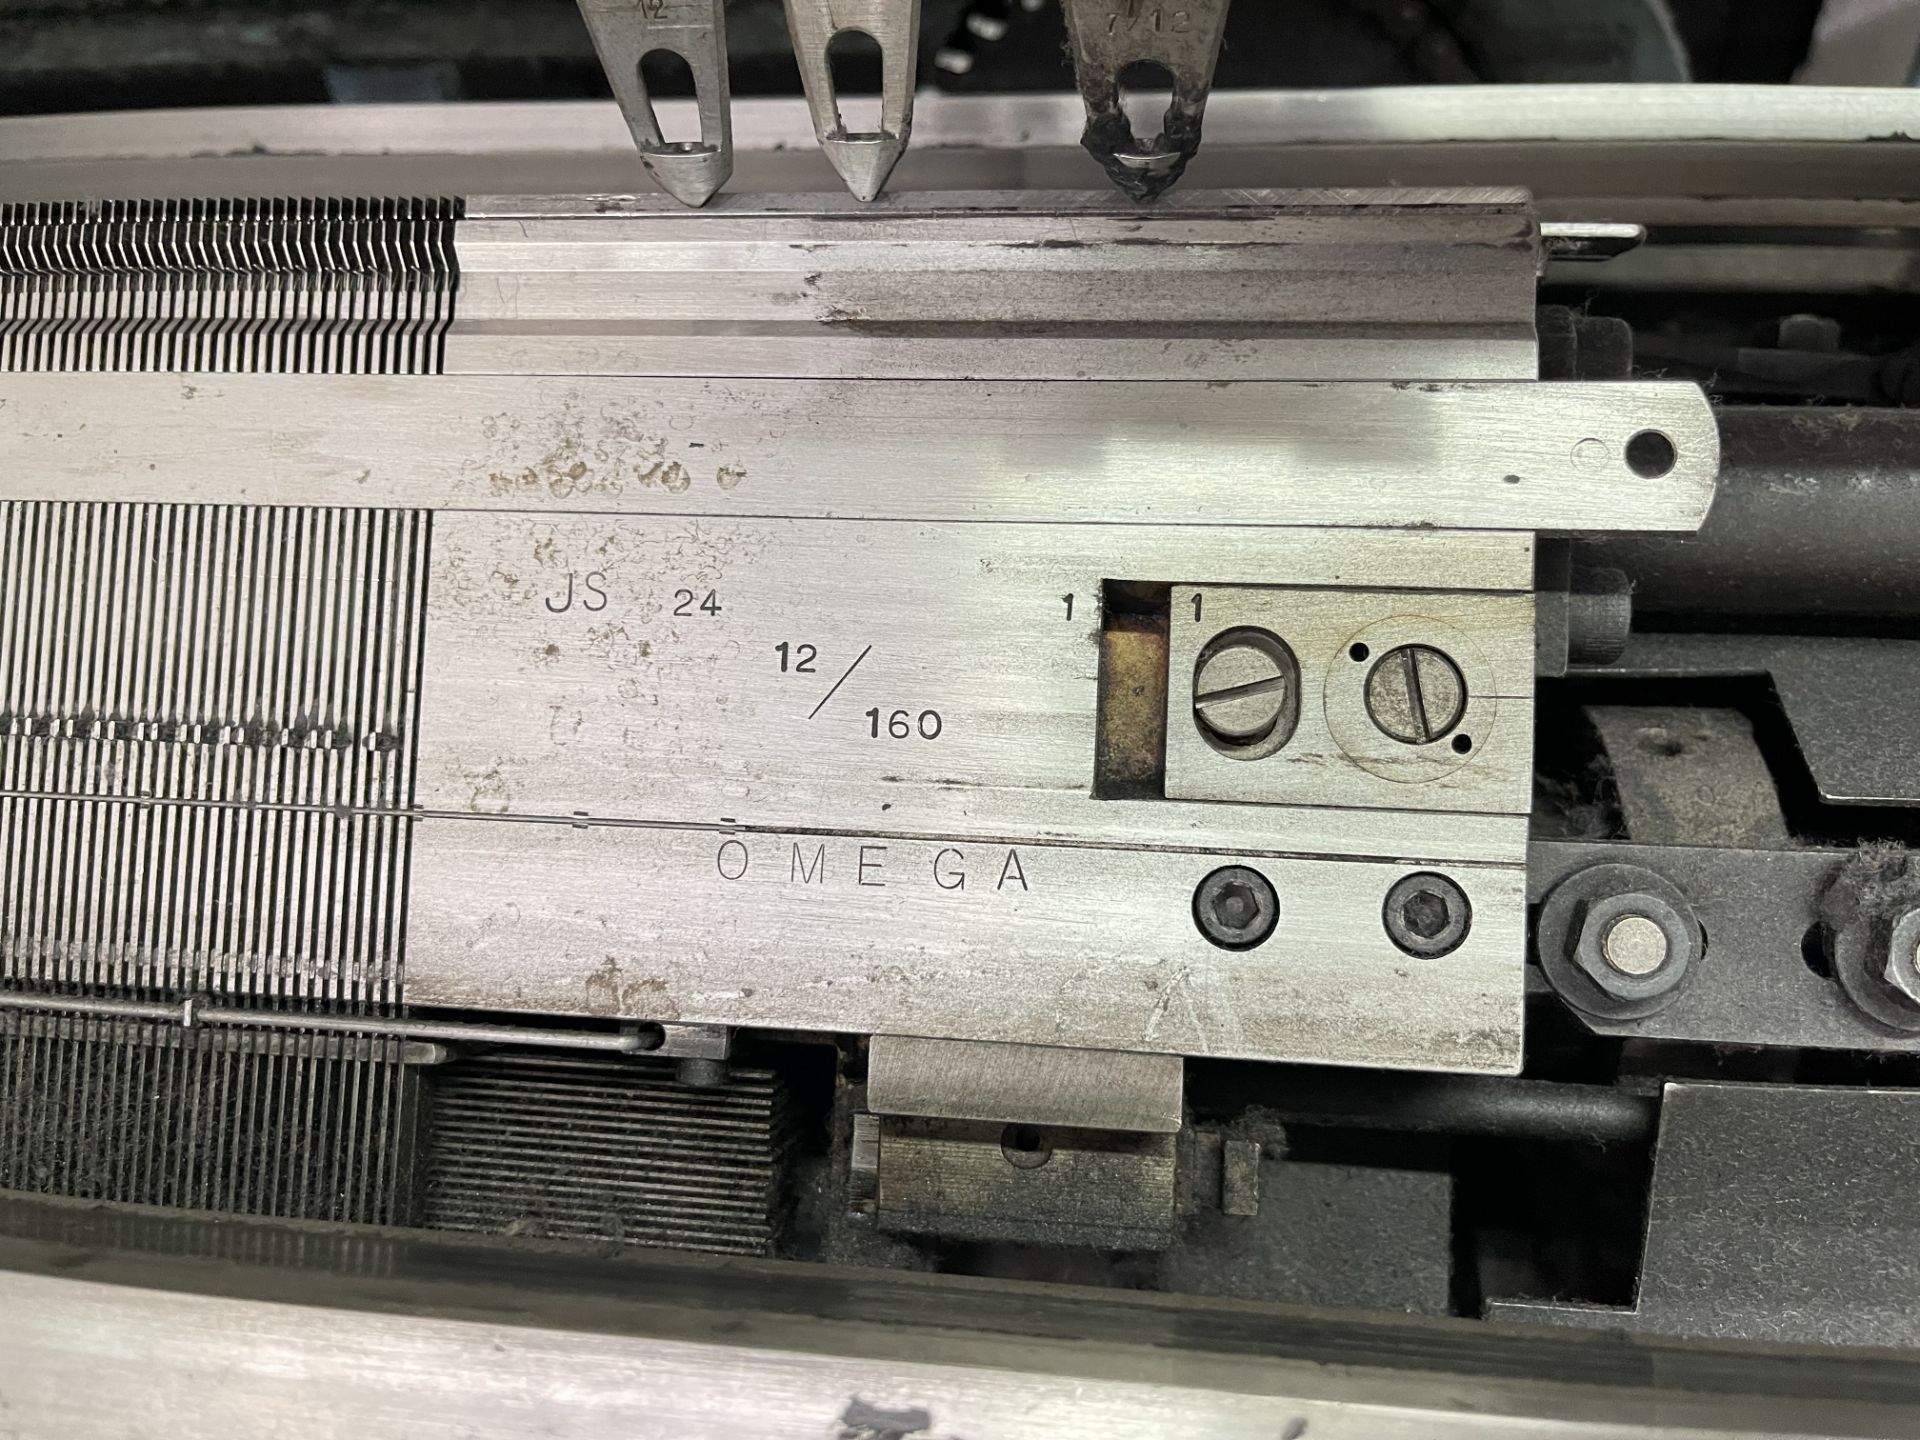 Omega JS 24 Type 12/160 Flat Bed Knitting Machine - Image 3 of 4